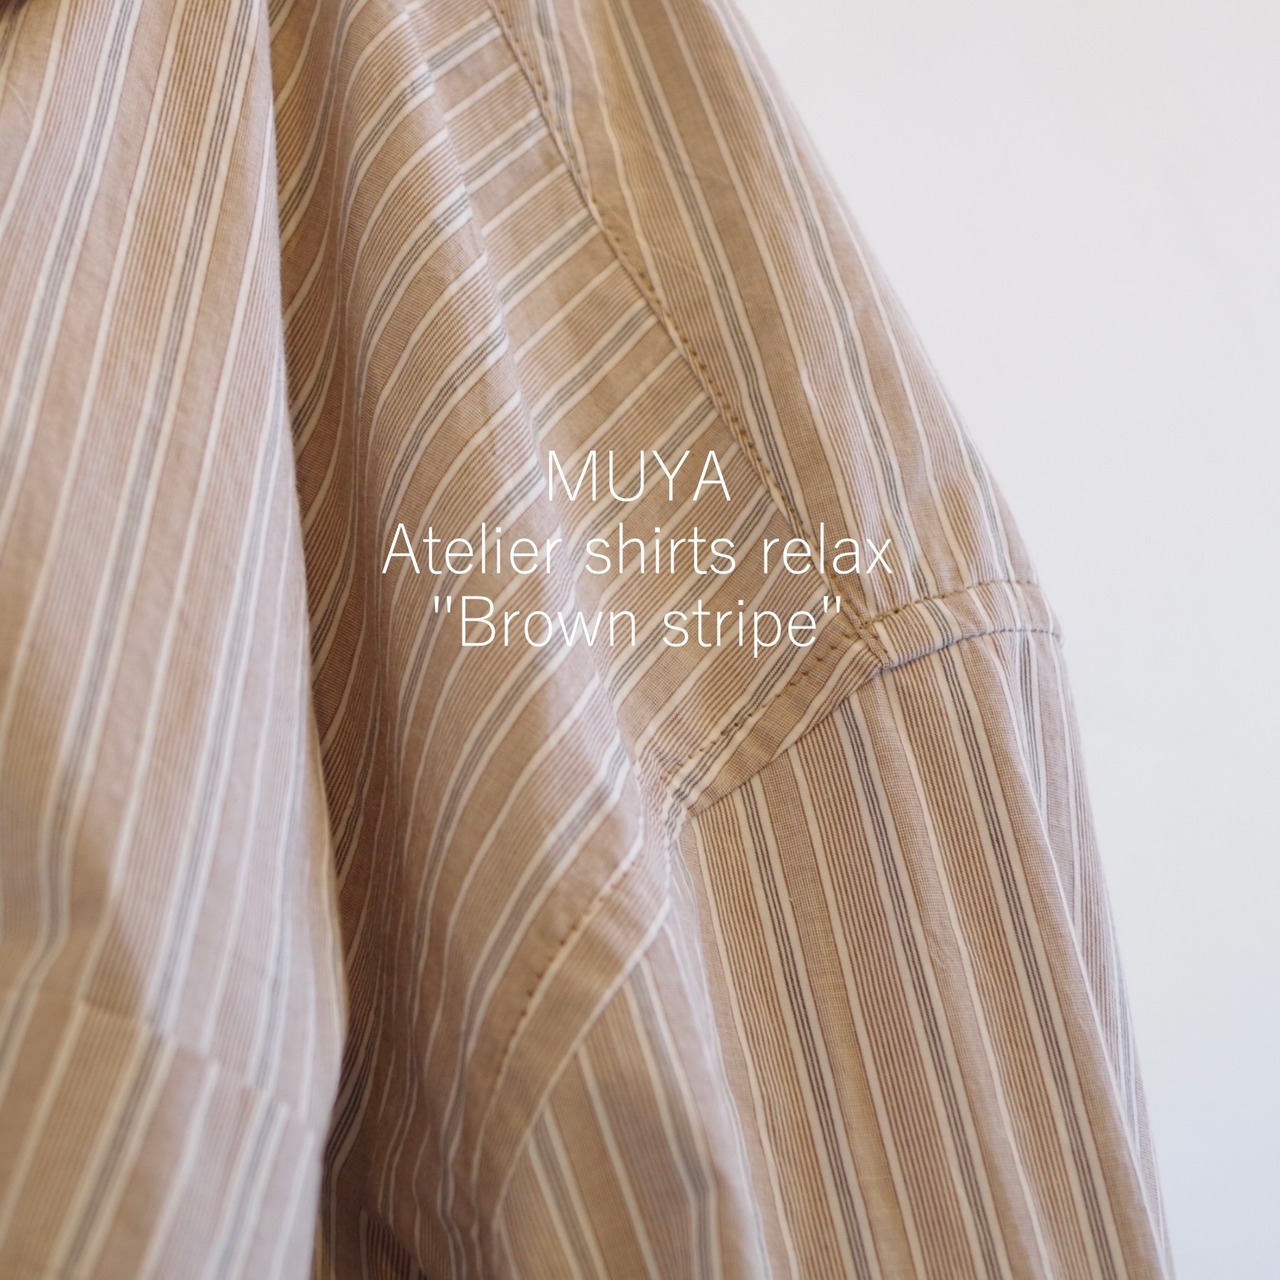 MUYA  Atelier shirts relax  "Brown stripe"